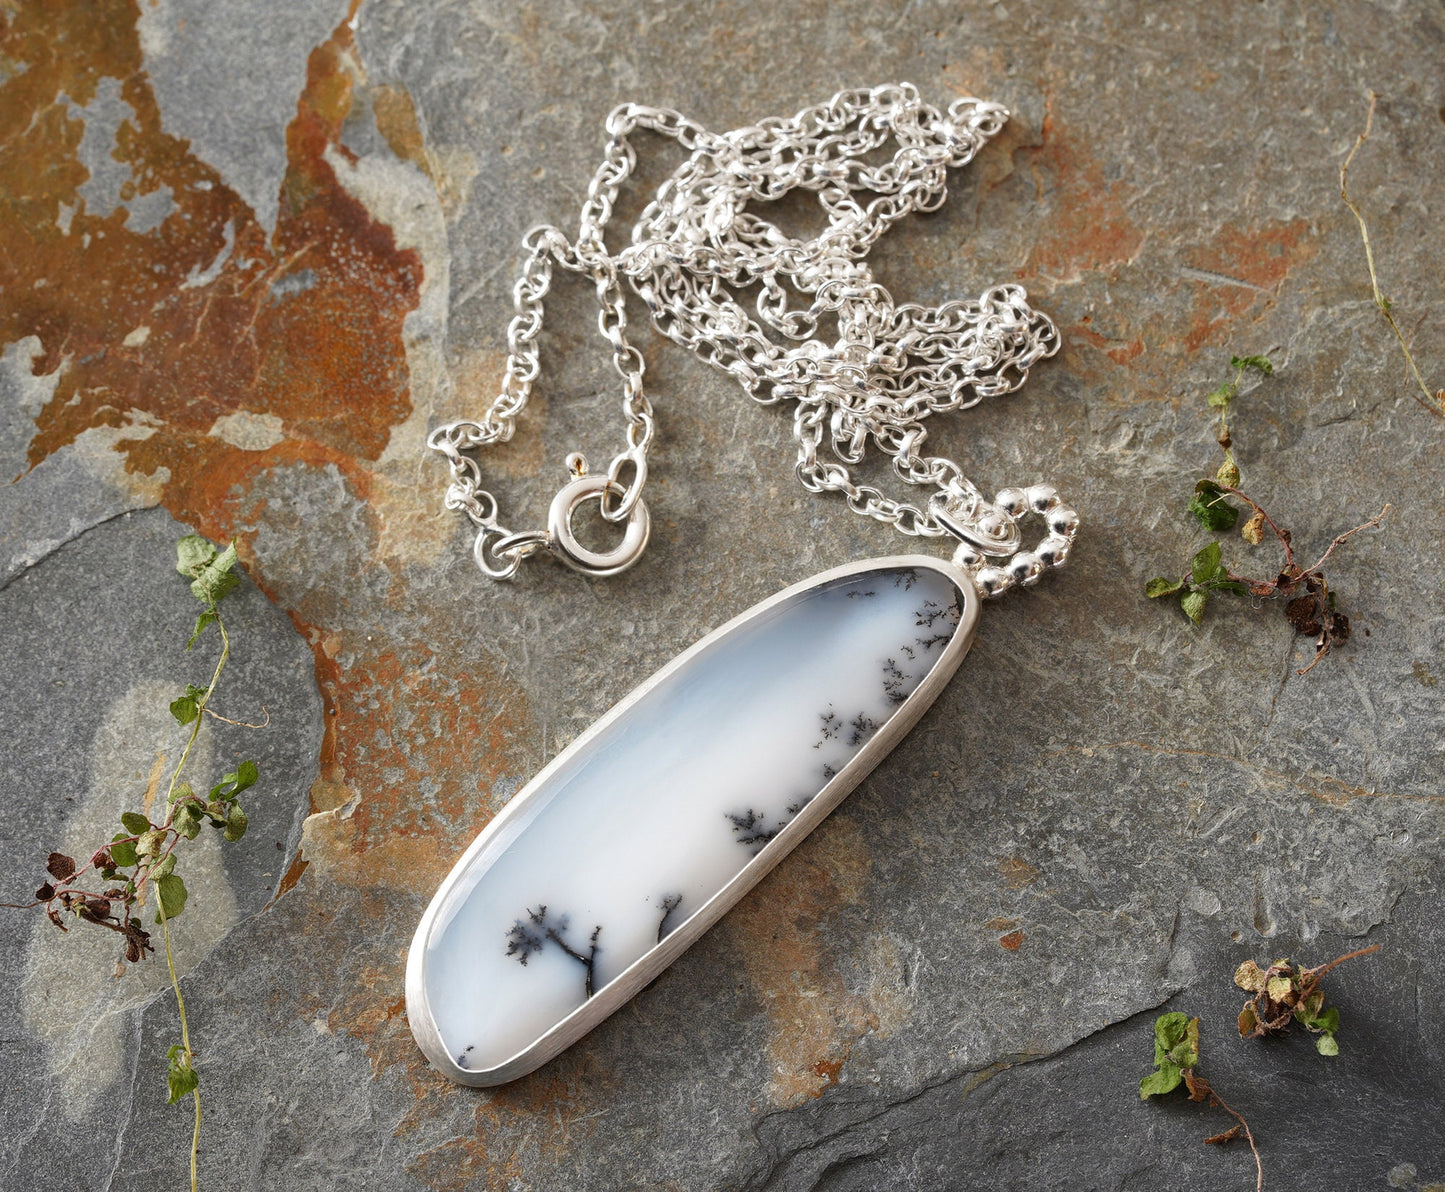 Unique Dendritic Agate Necklace in Sterling Silver